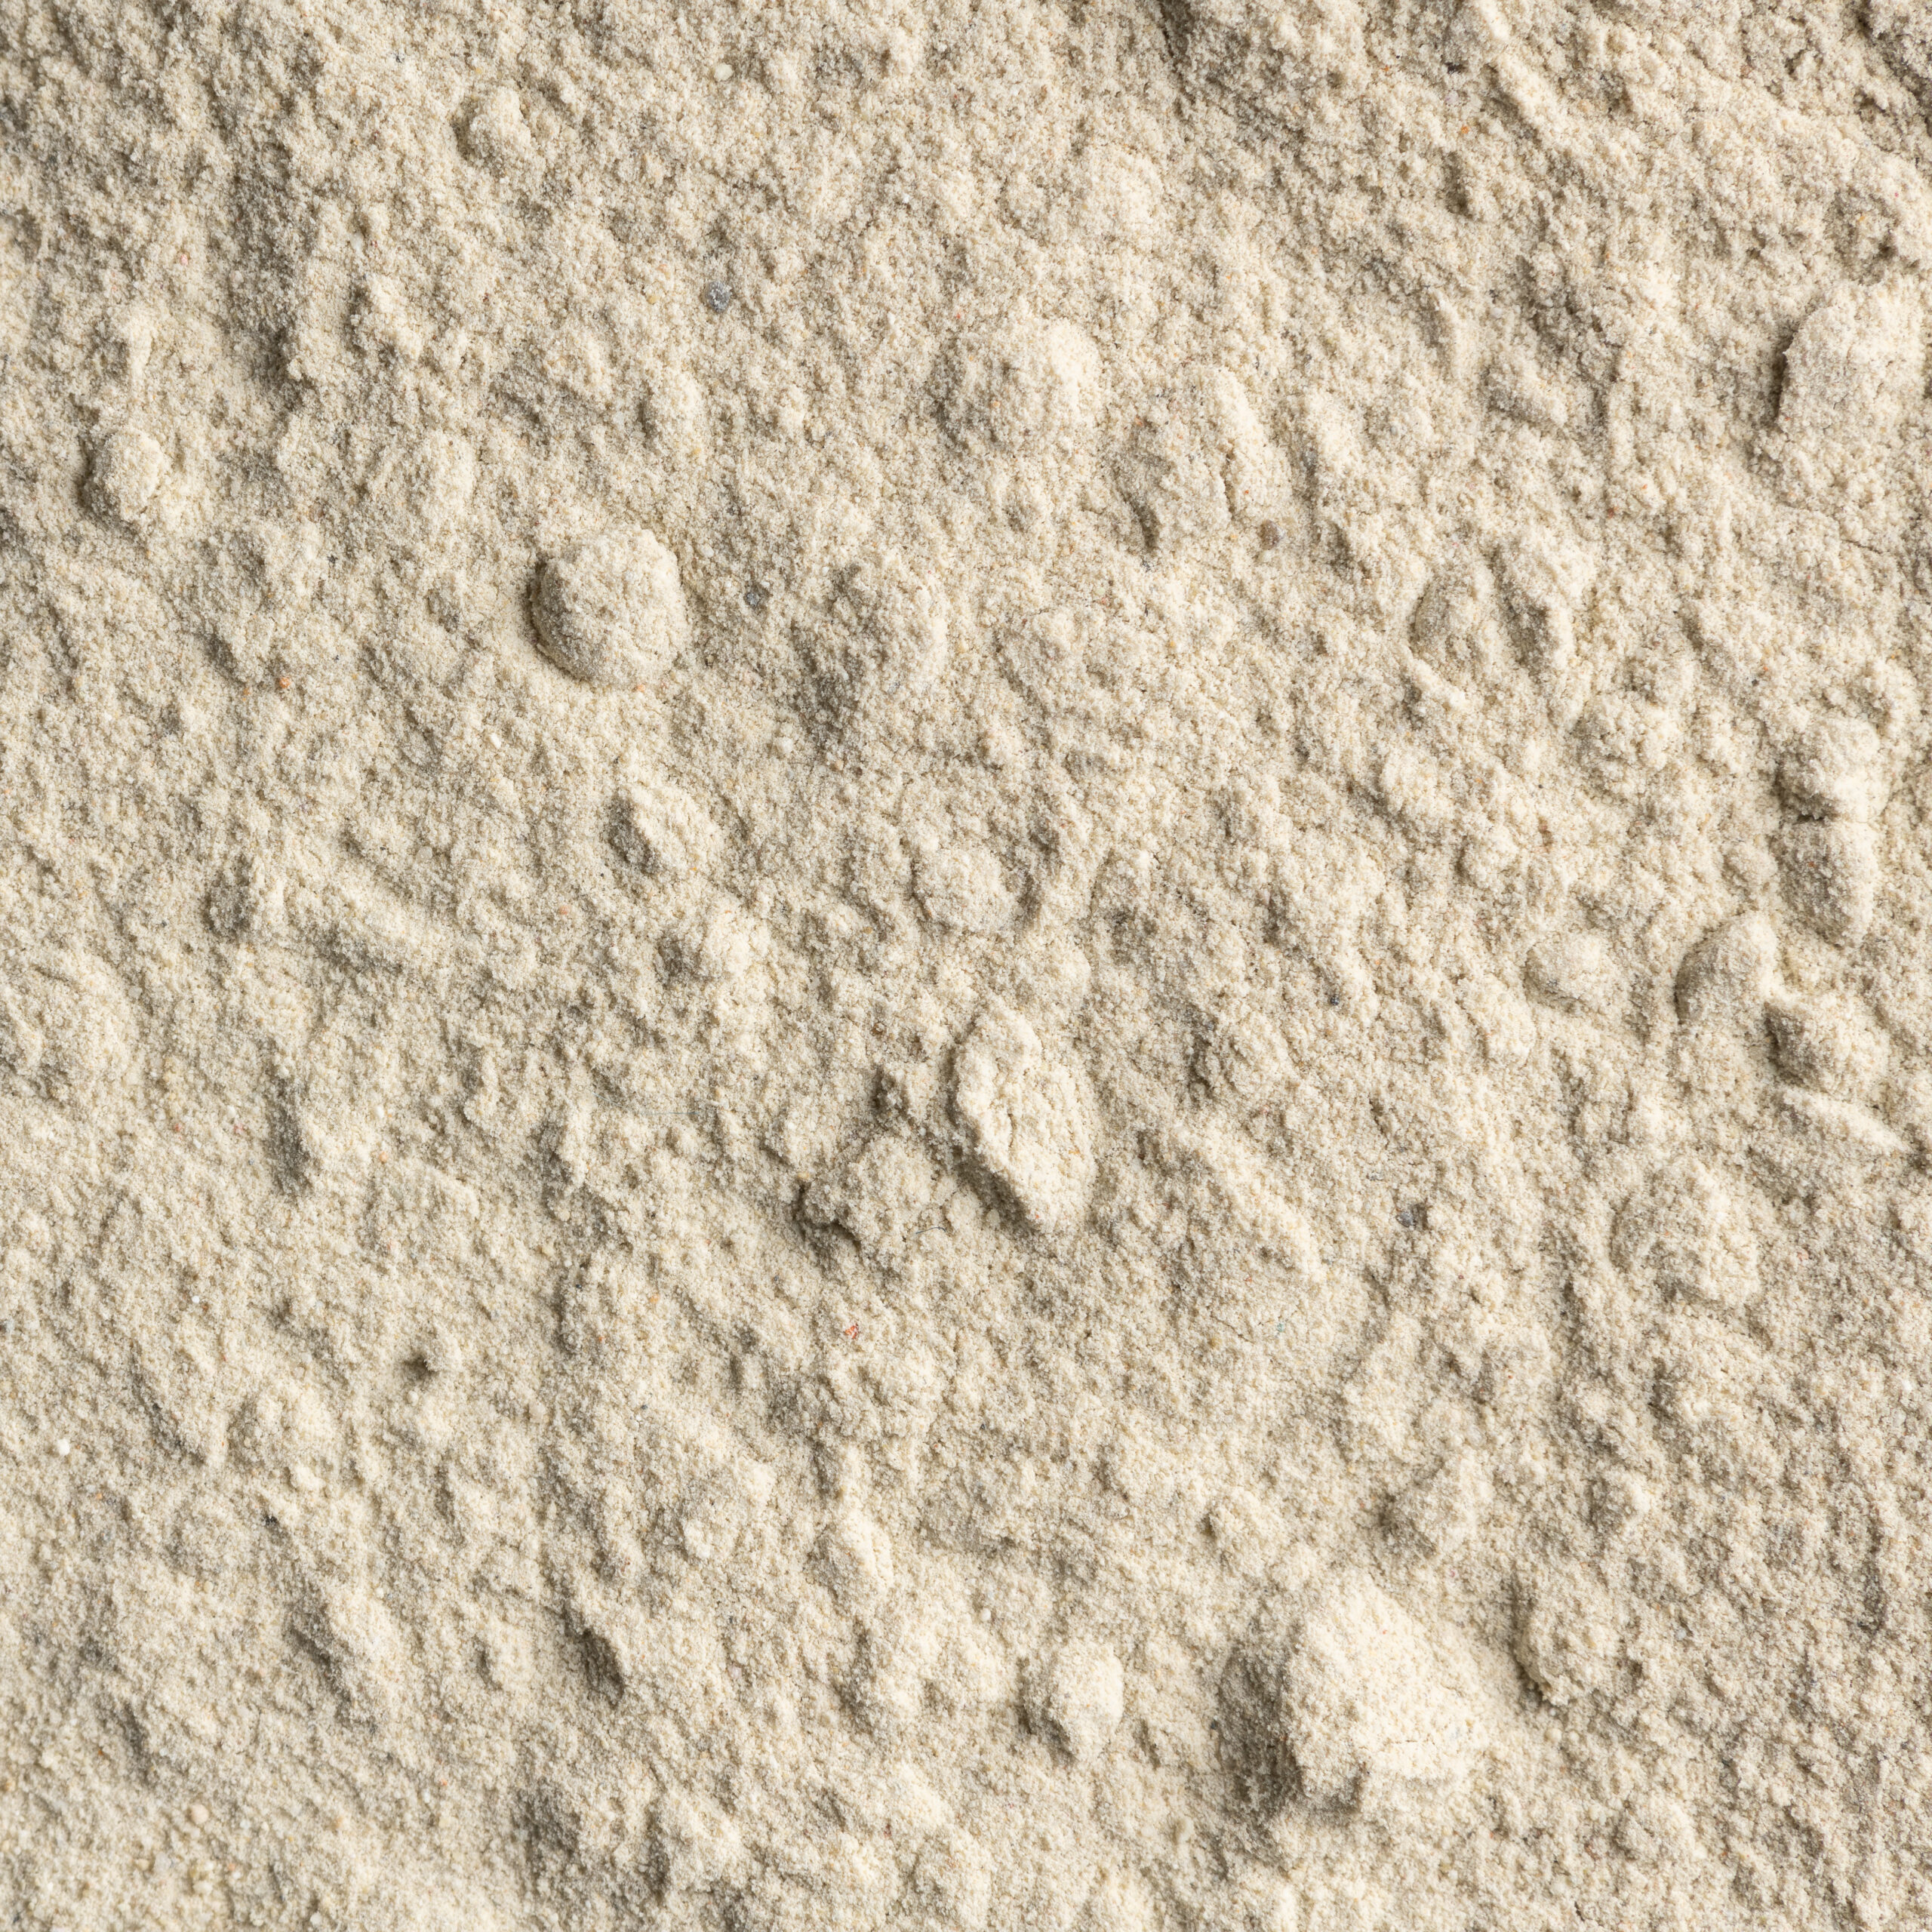 Bentonite Clay & Calcium Bentonite: Wide Uses